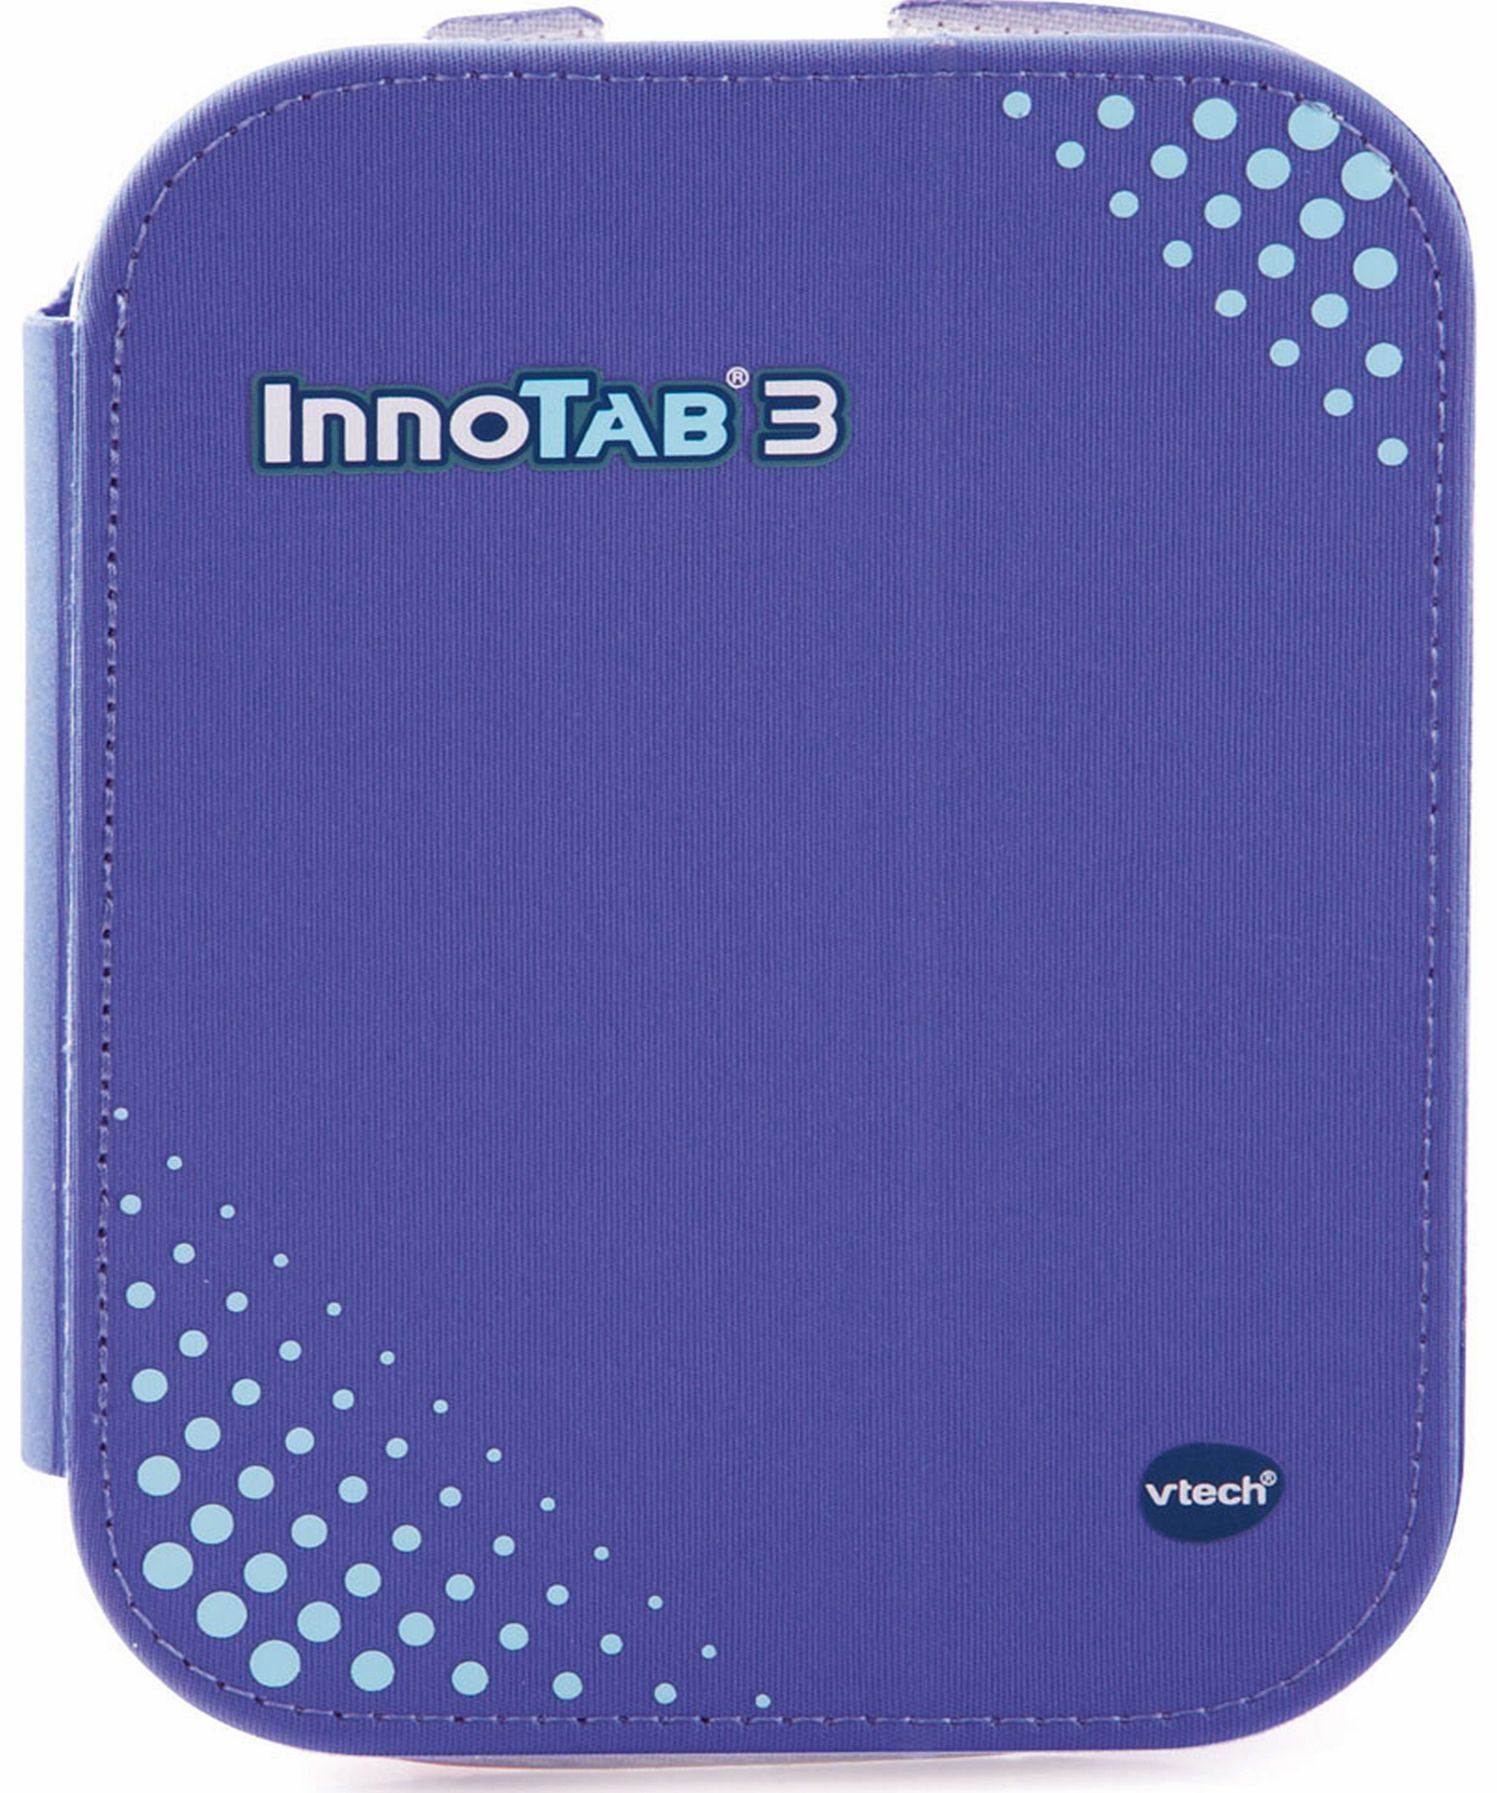 Vtech InnoTab 3 Folio Case - Blue